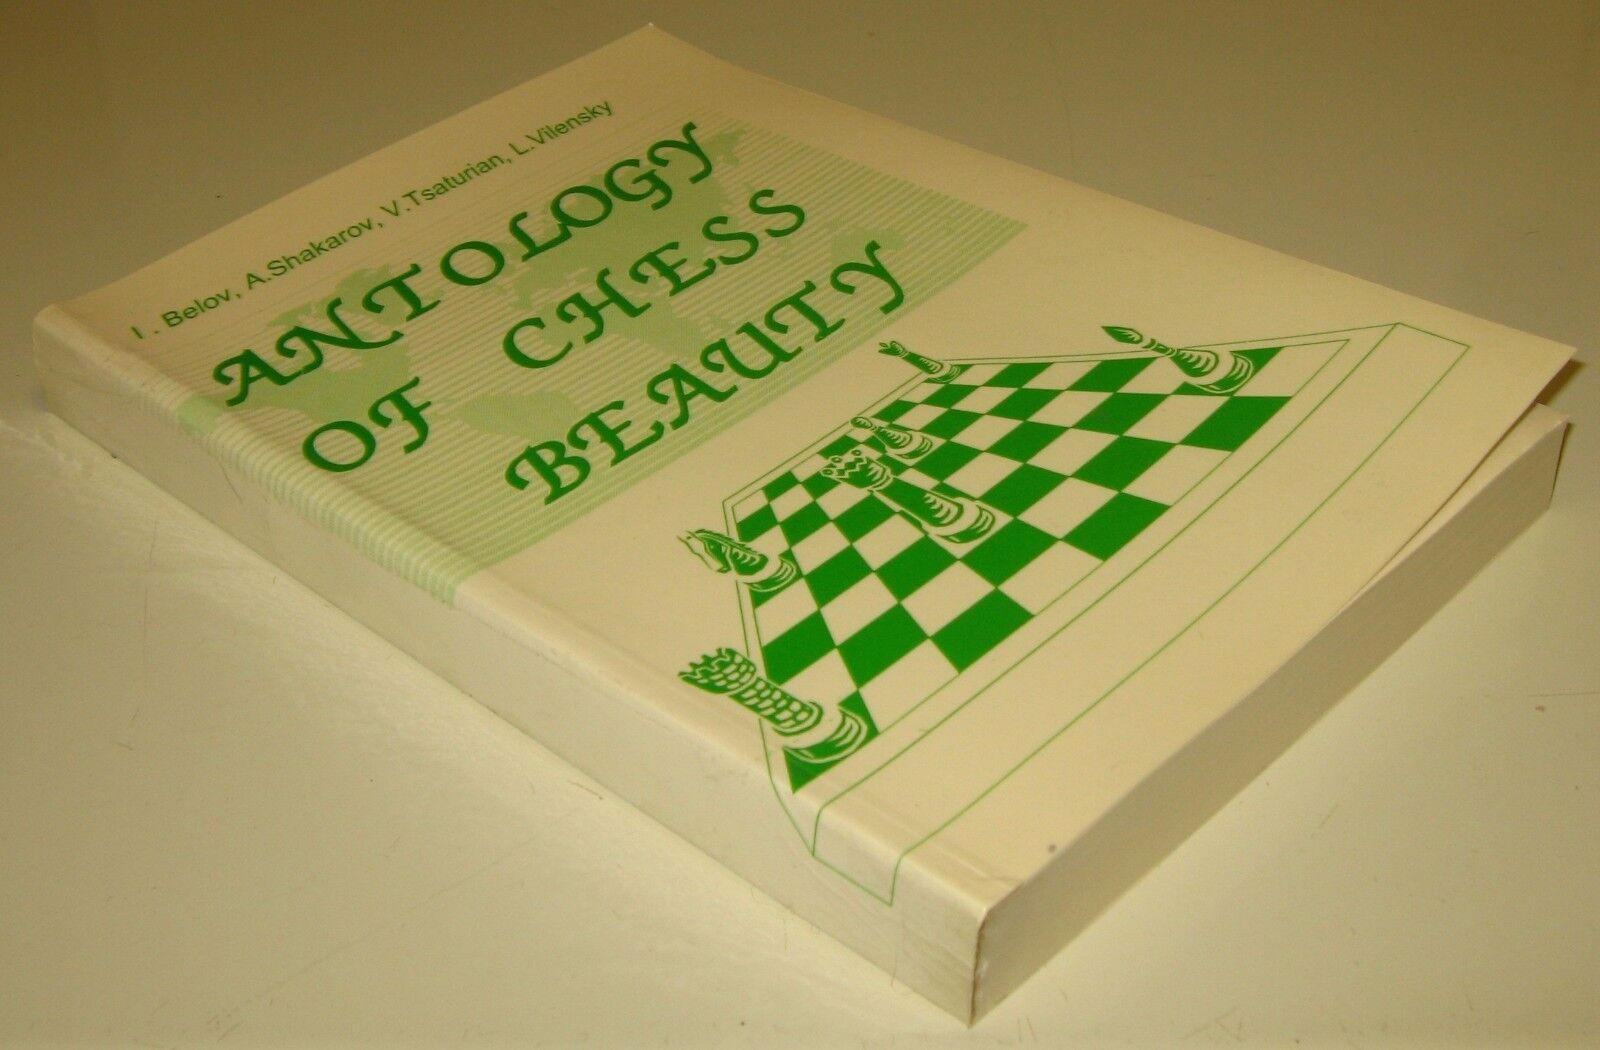 11056.Chess Book: Belov, Shakarov, Tsaturian. Anthology of chess beauty. 1996